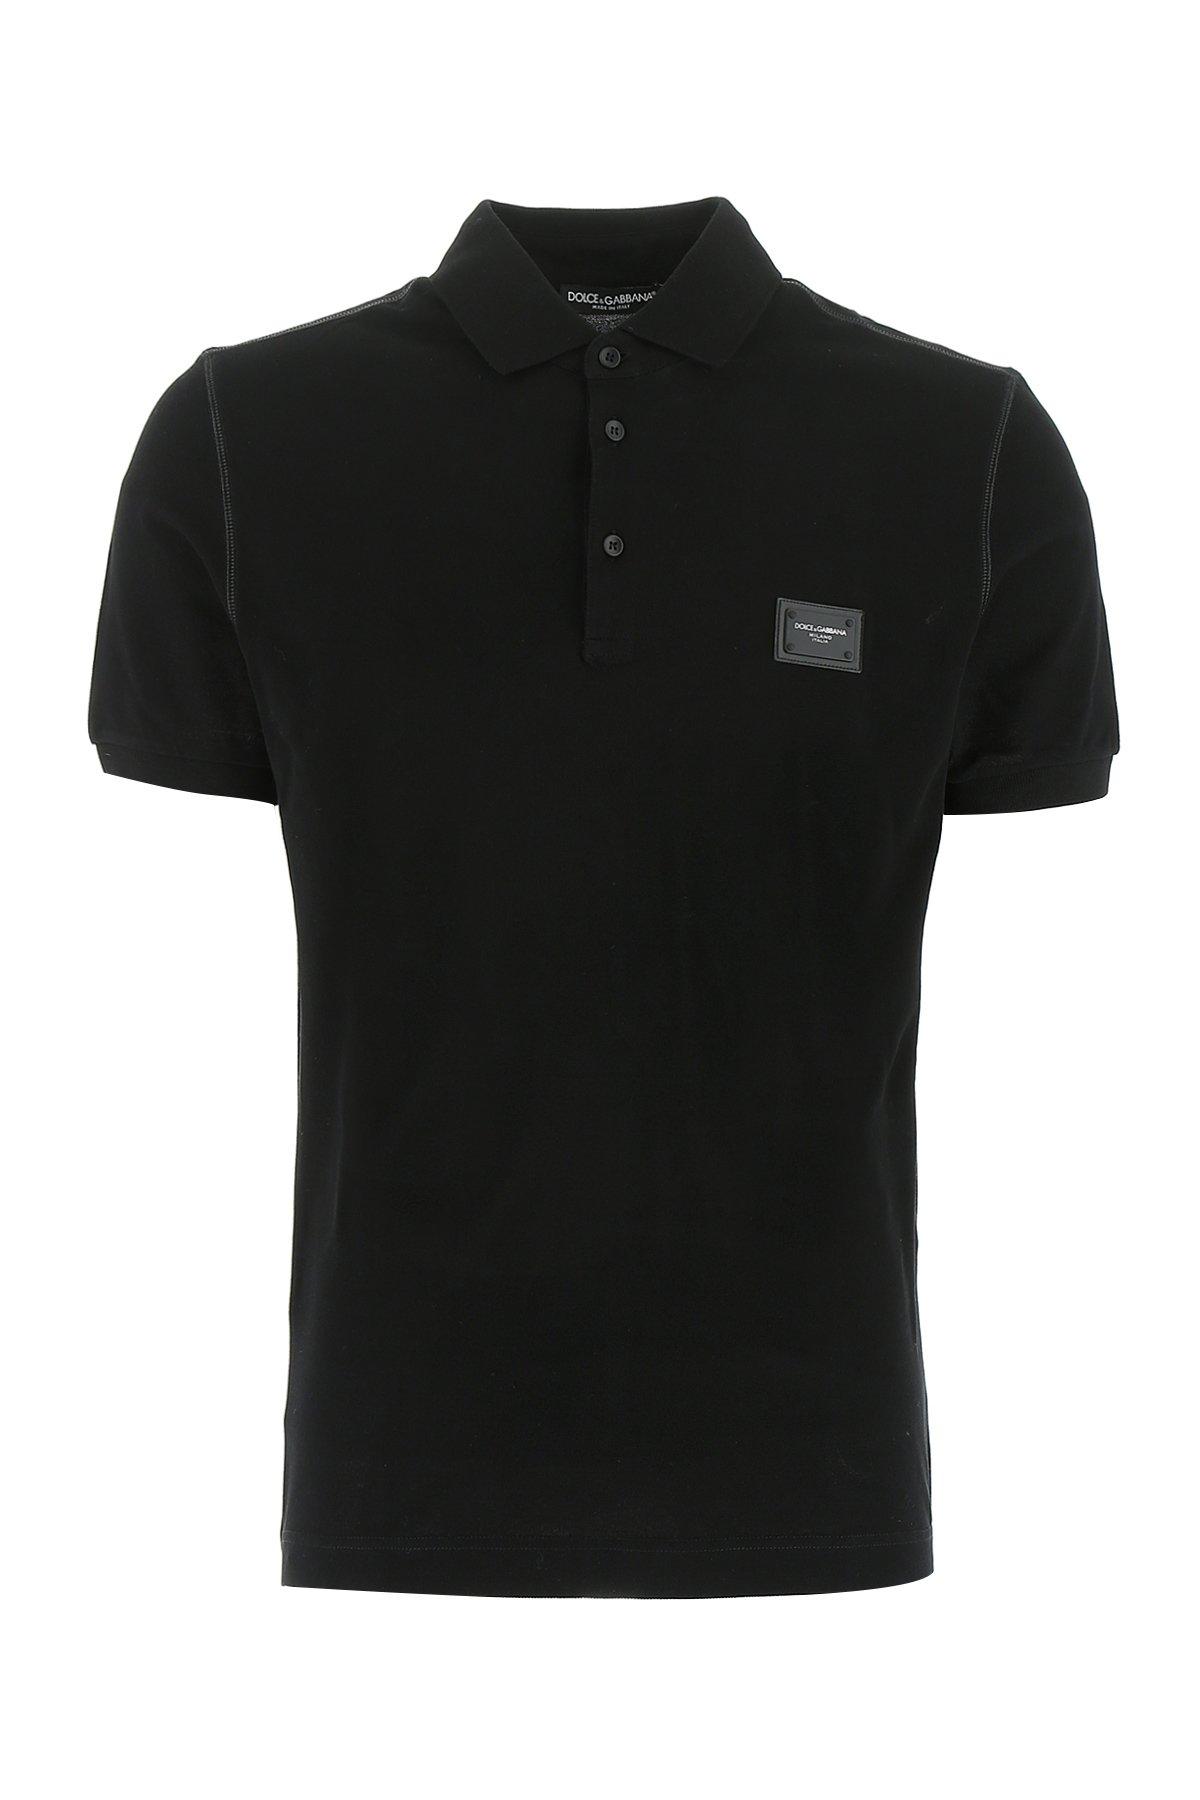 Dolce & Gabbana Cotton Classic Logo Plaque Polo Shirt in Black for Men ...